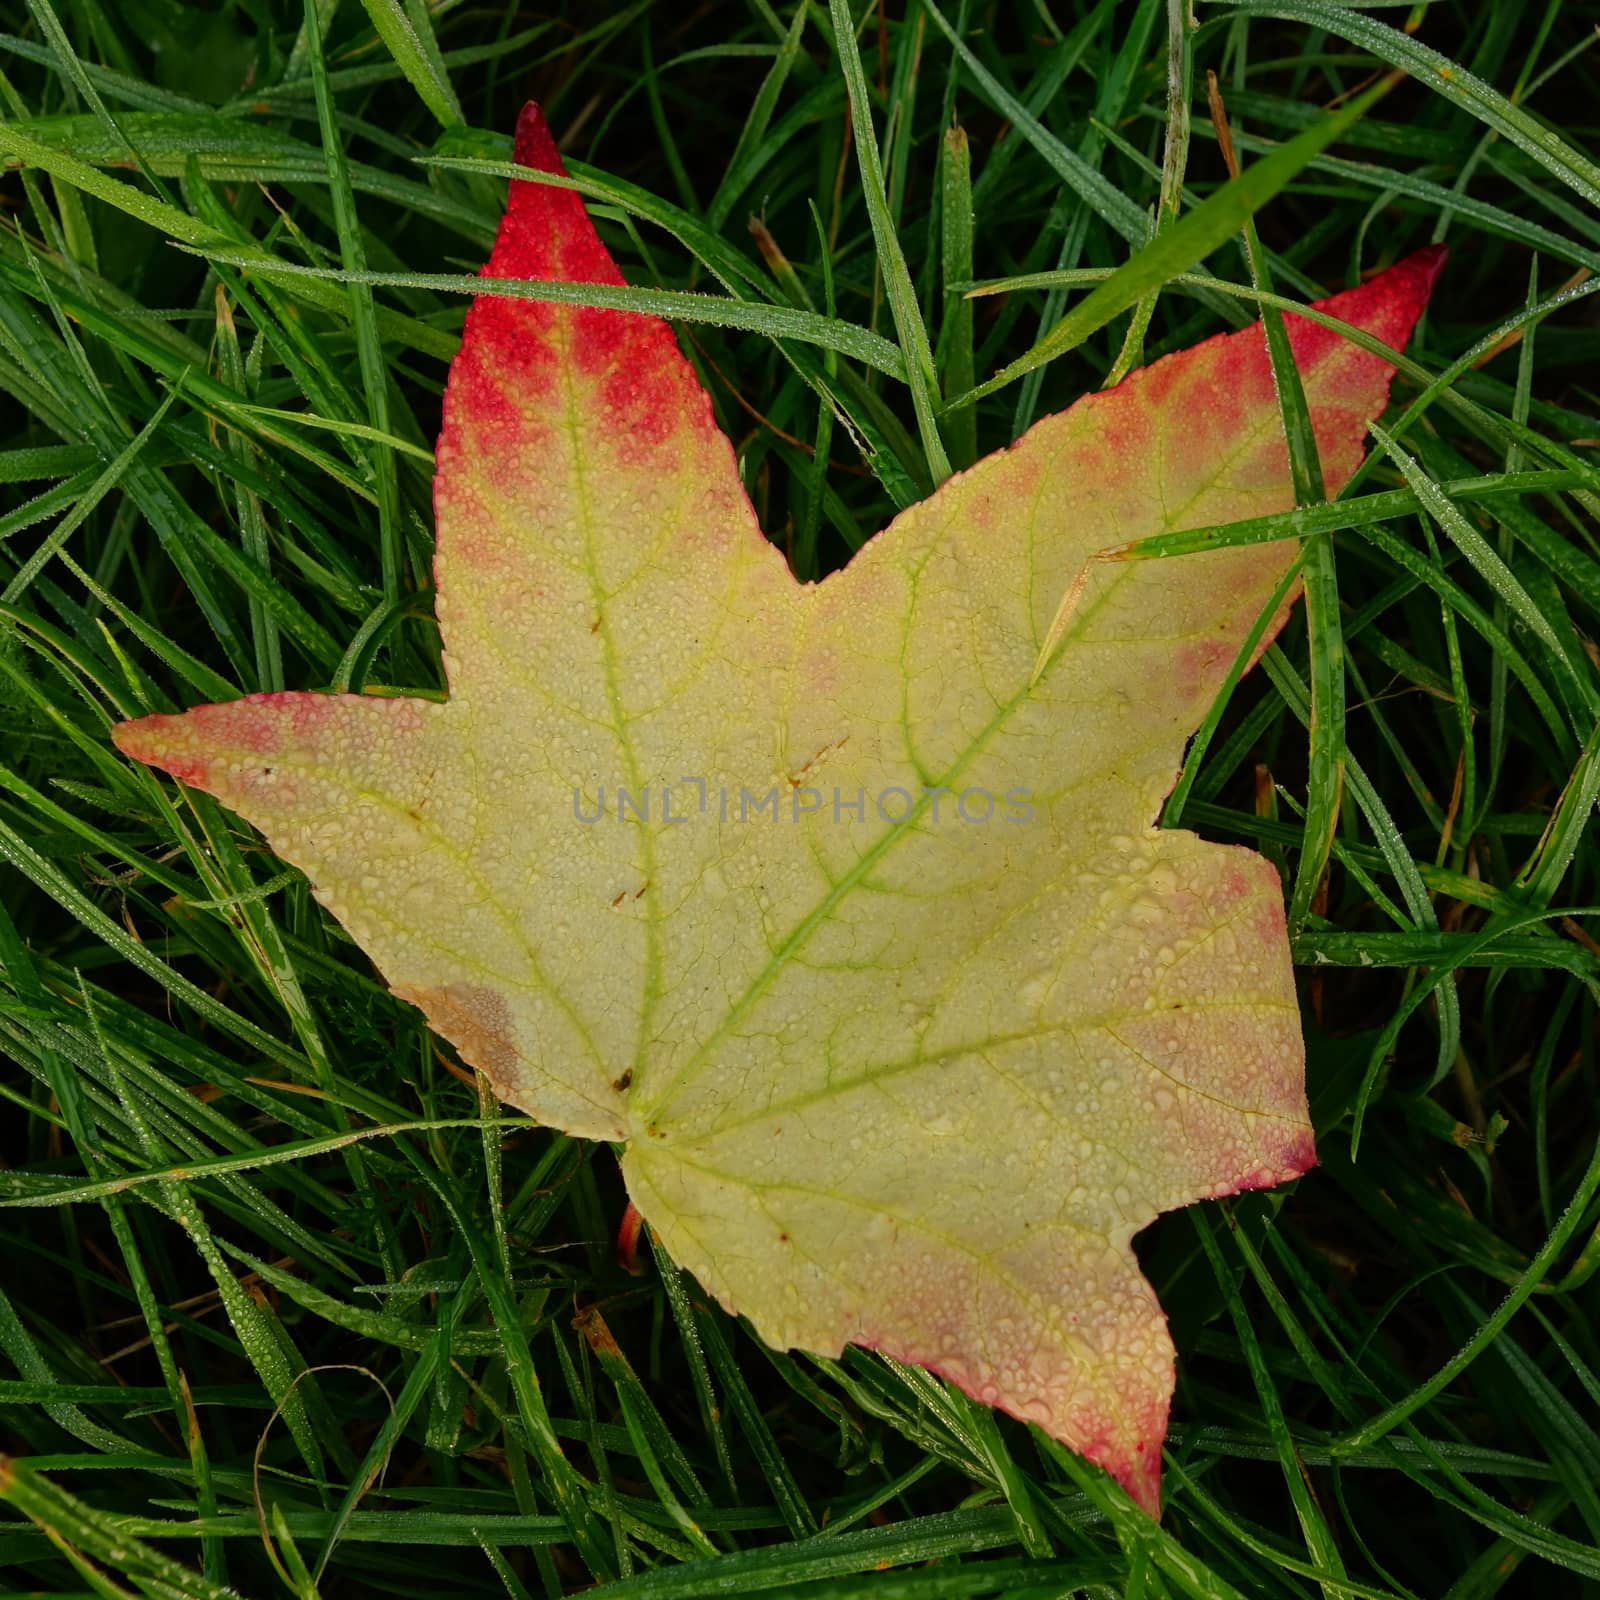 Yellow and red leaf of sweet gum tree (liquidambar styraciflua) in autumn / fall